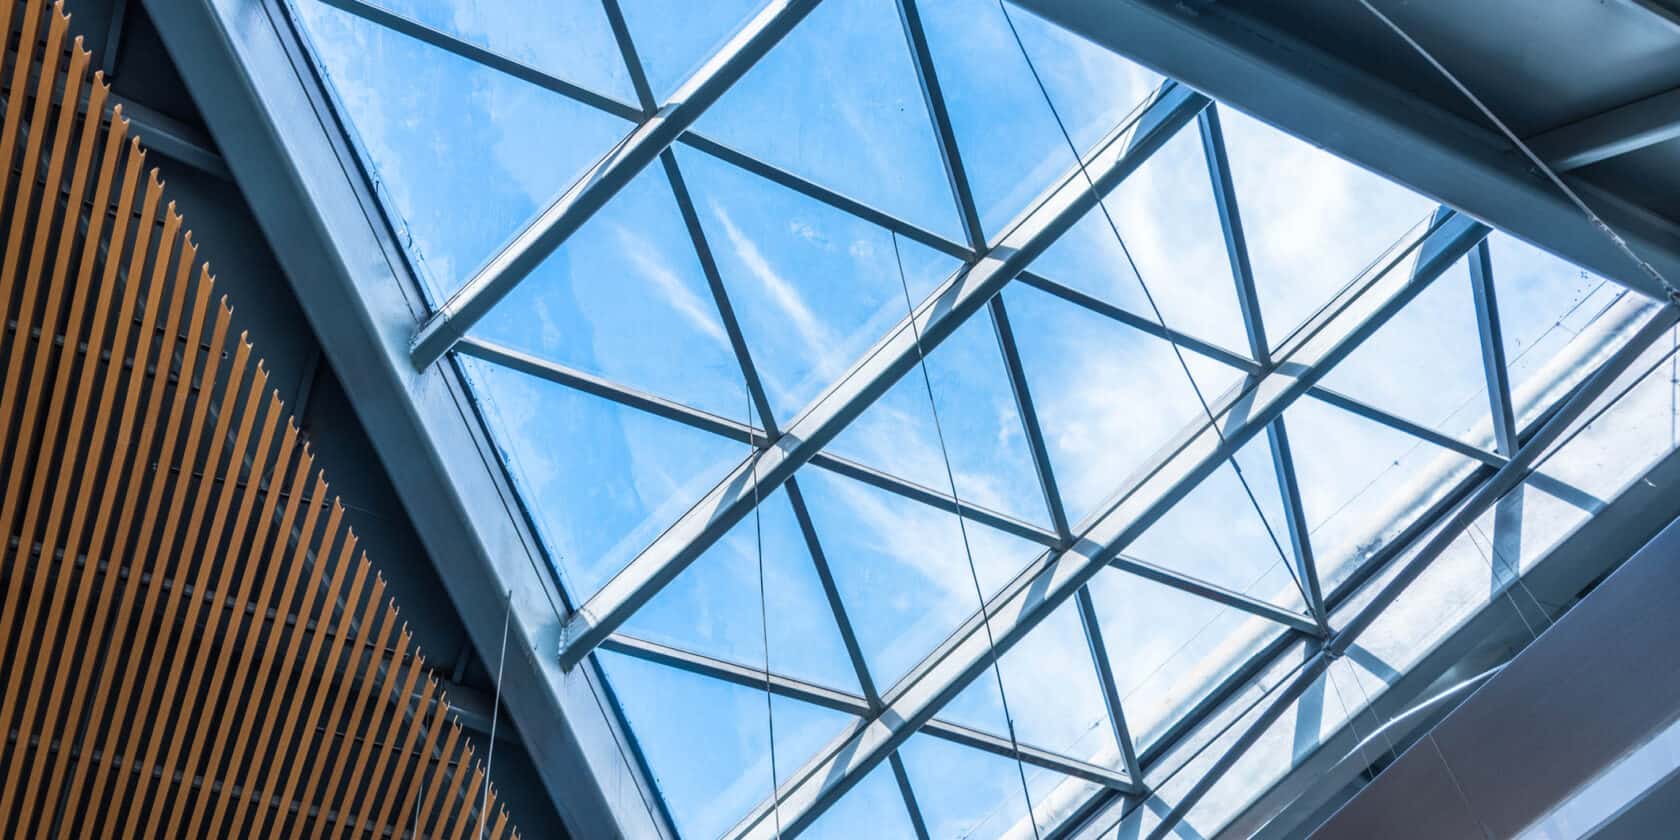 A glass triangular ceiling.